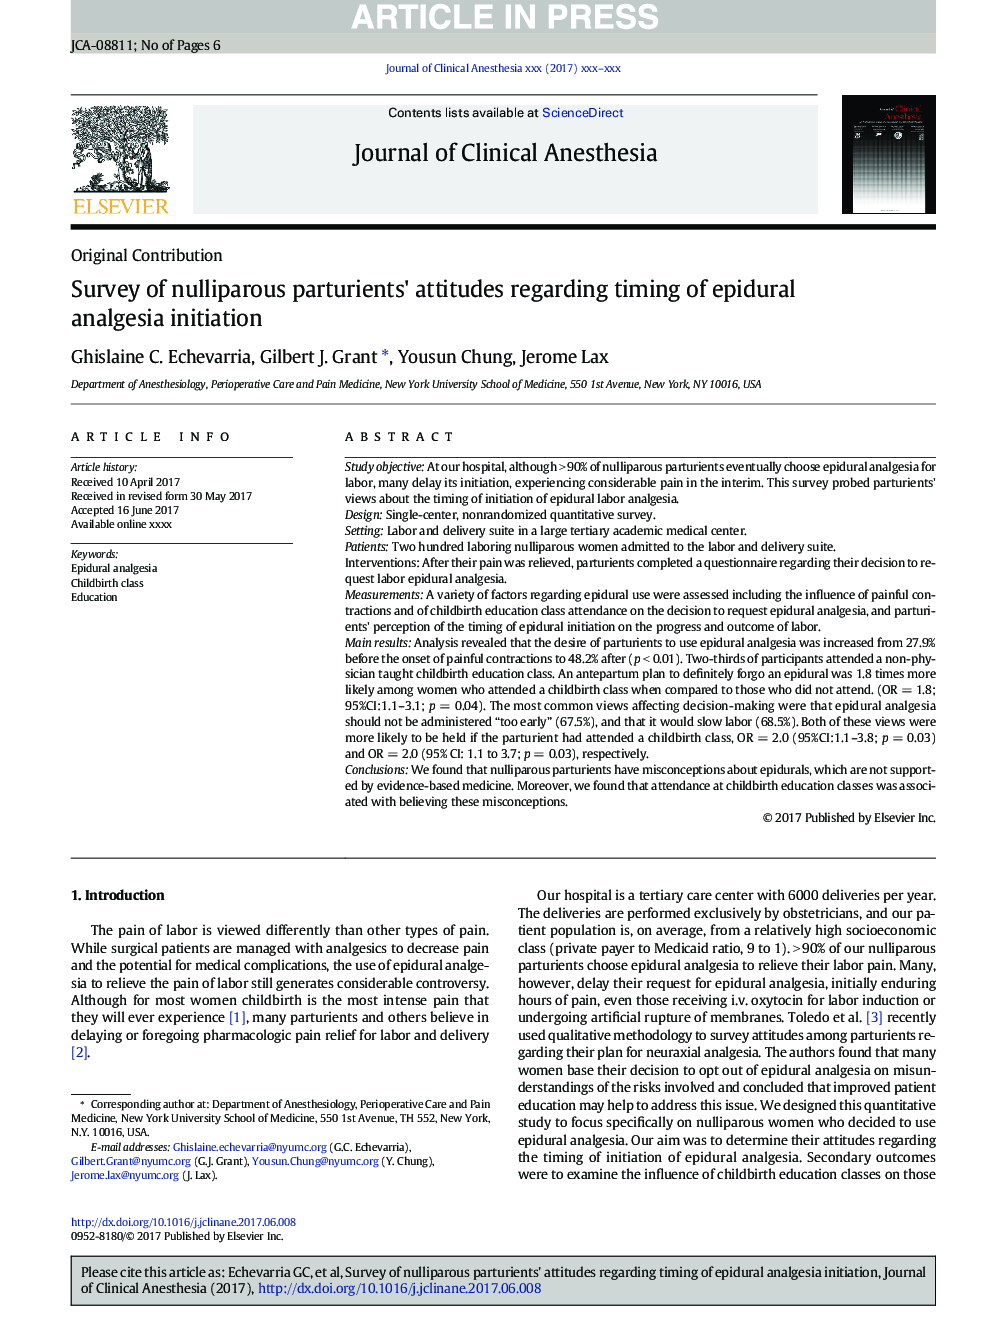 Survey of nulliparous parturients' attitudes regarding timing of epidural analgesia initiation